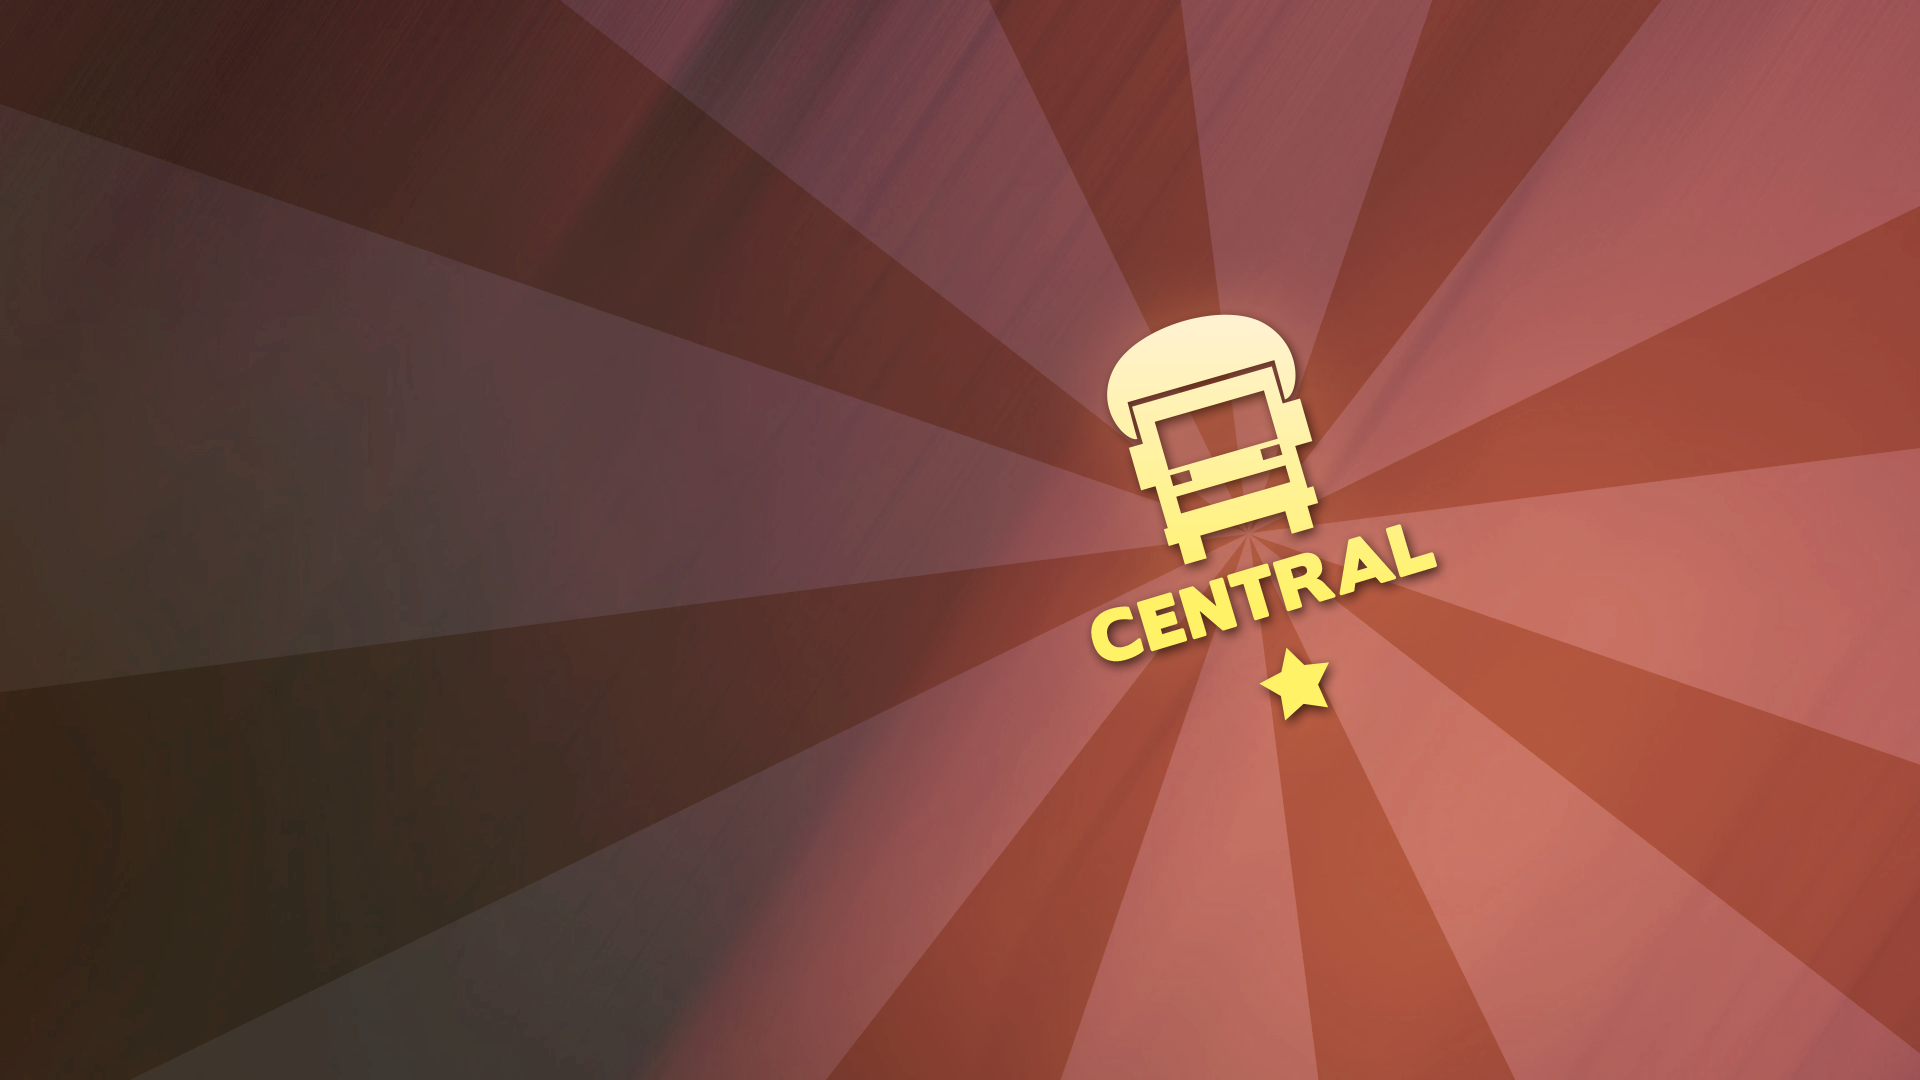 Tank truck insignia 'Central'